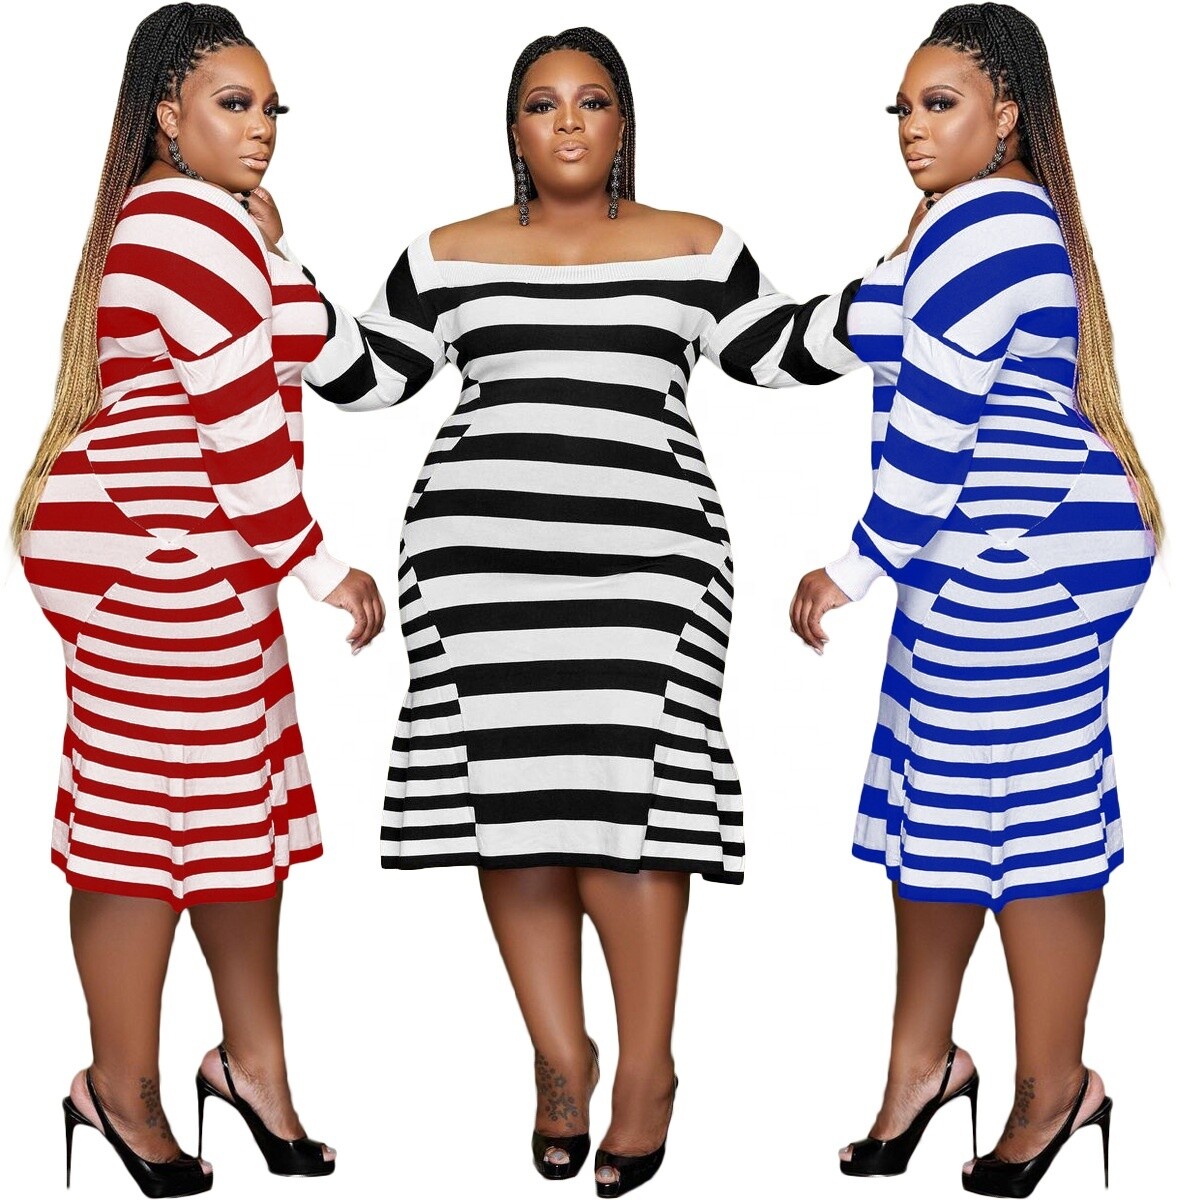 KX-Q77310  Latest design women's clothing knit dress off shoulder striped ladies fashion plus size fall dresses 4xl 5xl 6xl 7xl